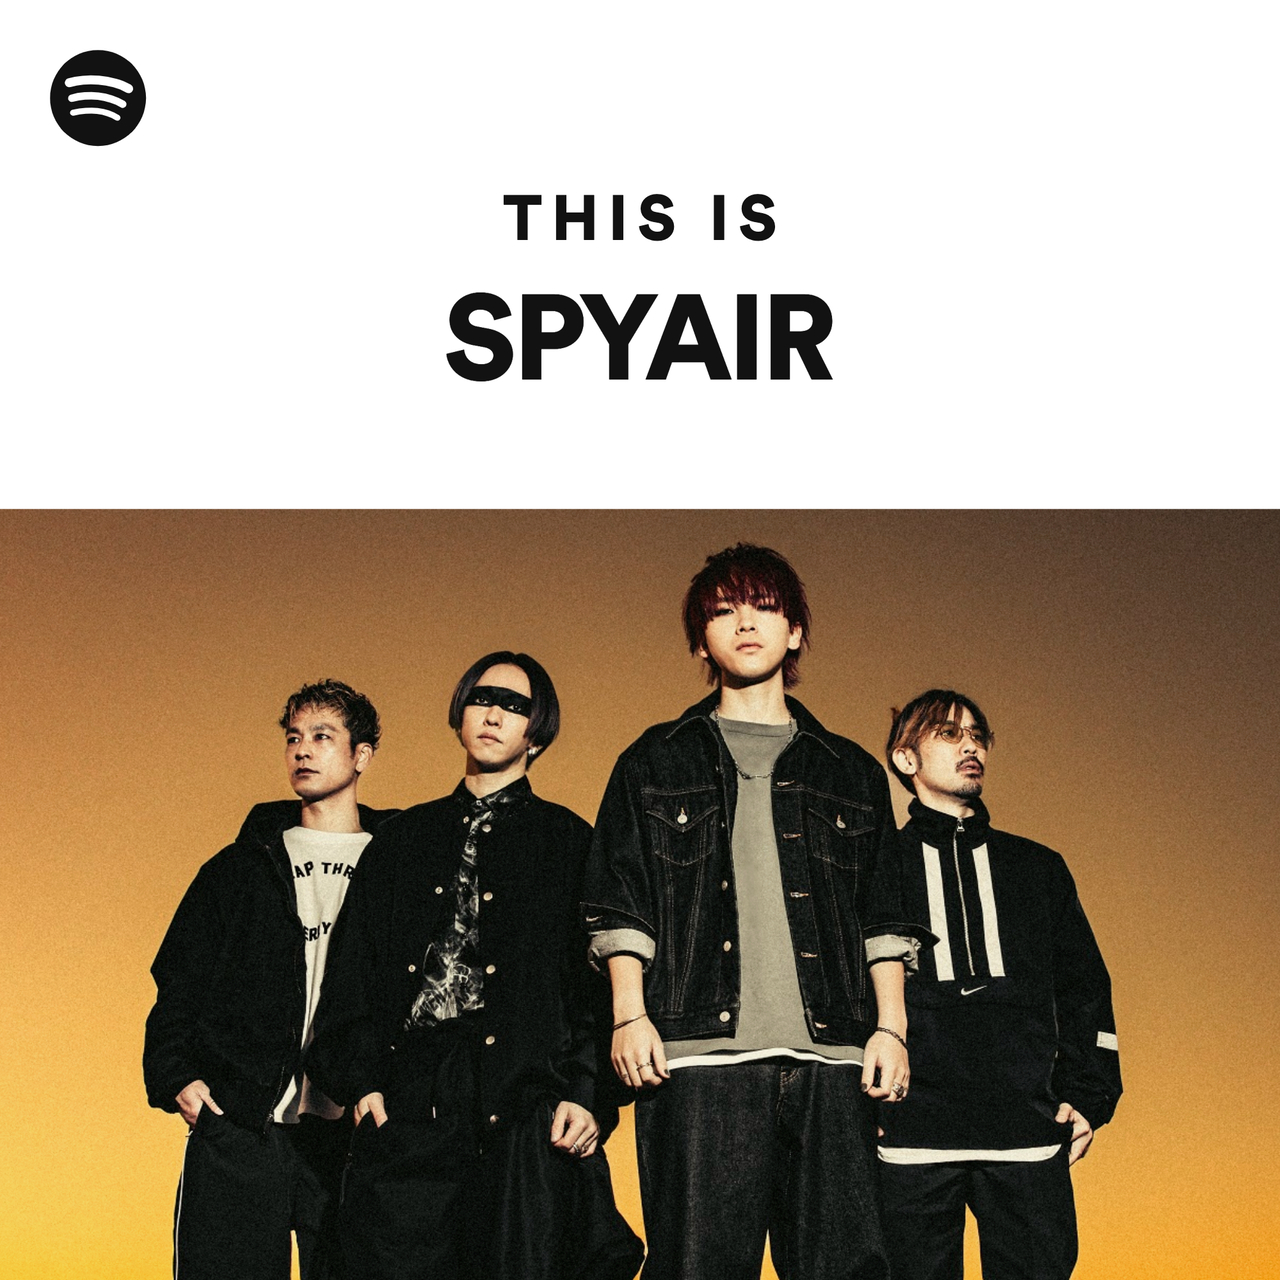 Spyair Spotify